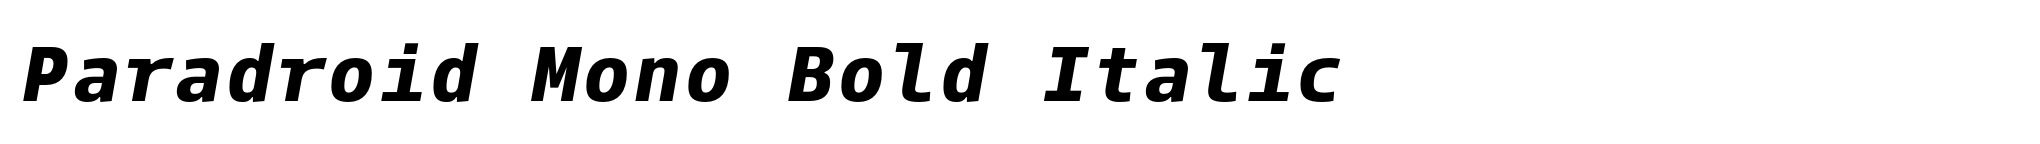 Paradroid Mono Bold Italic image